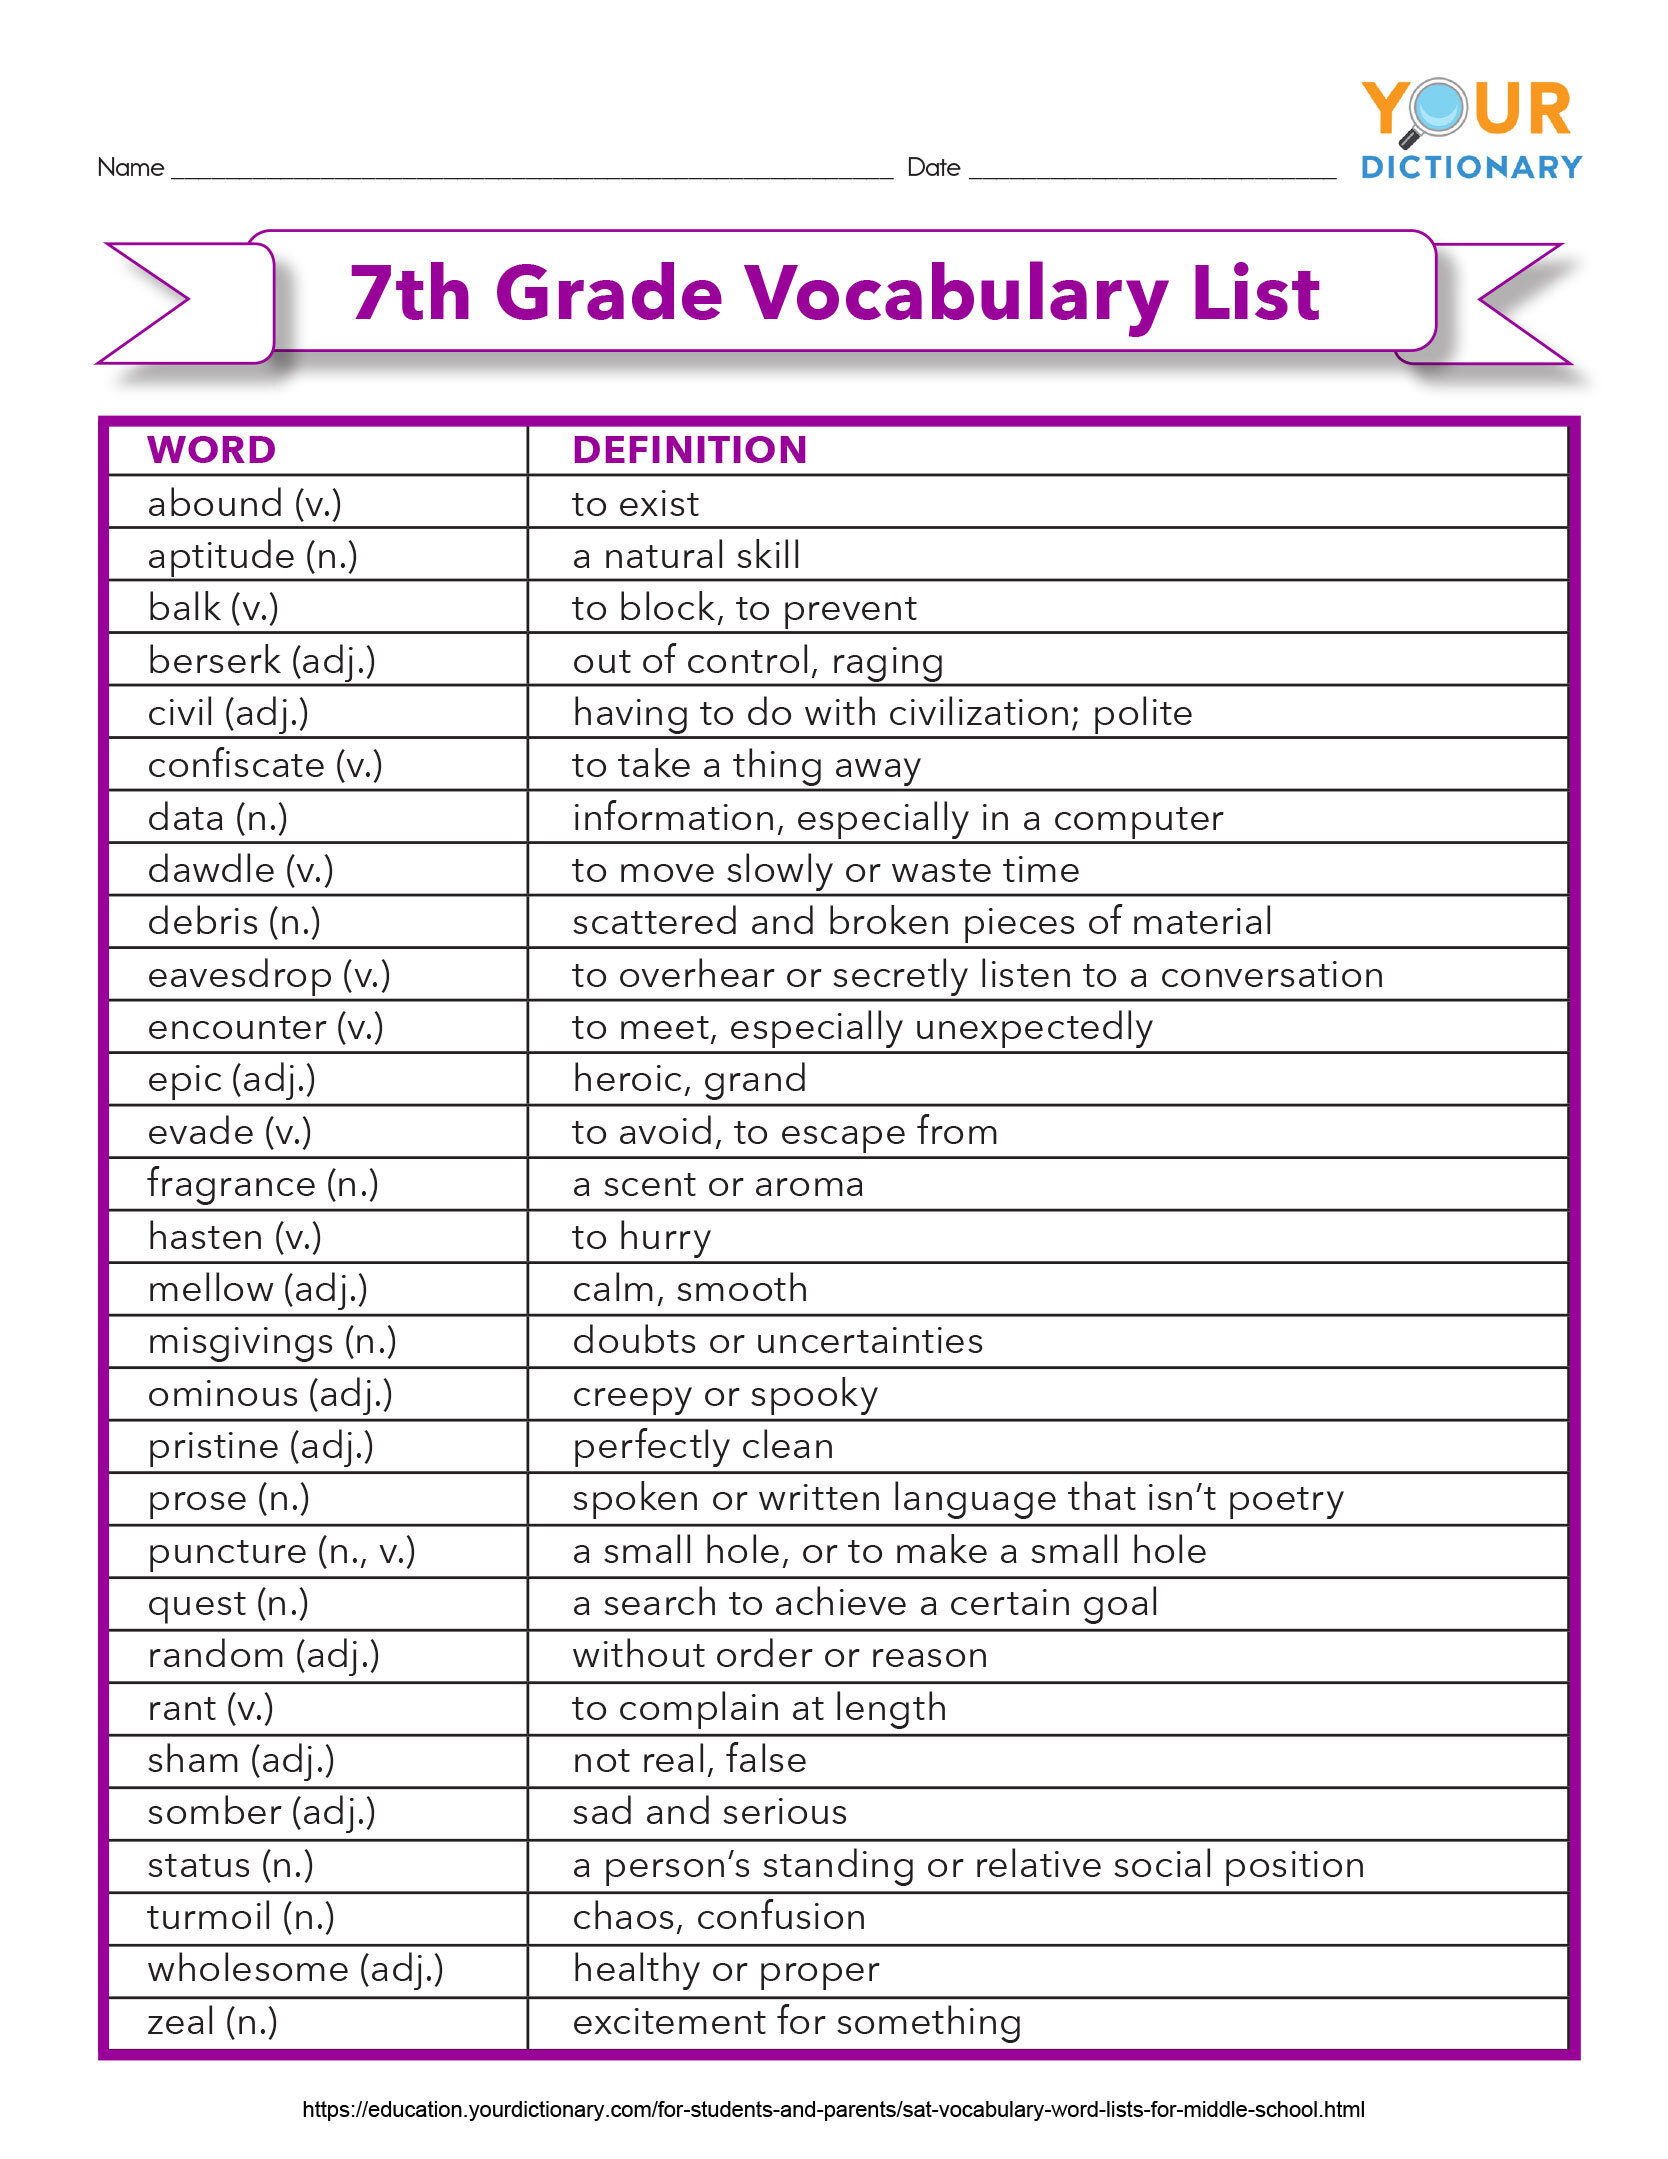 7th Grade Vocabulary Words List